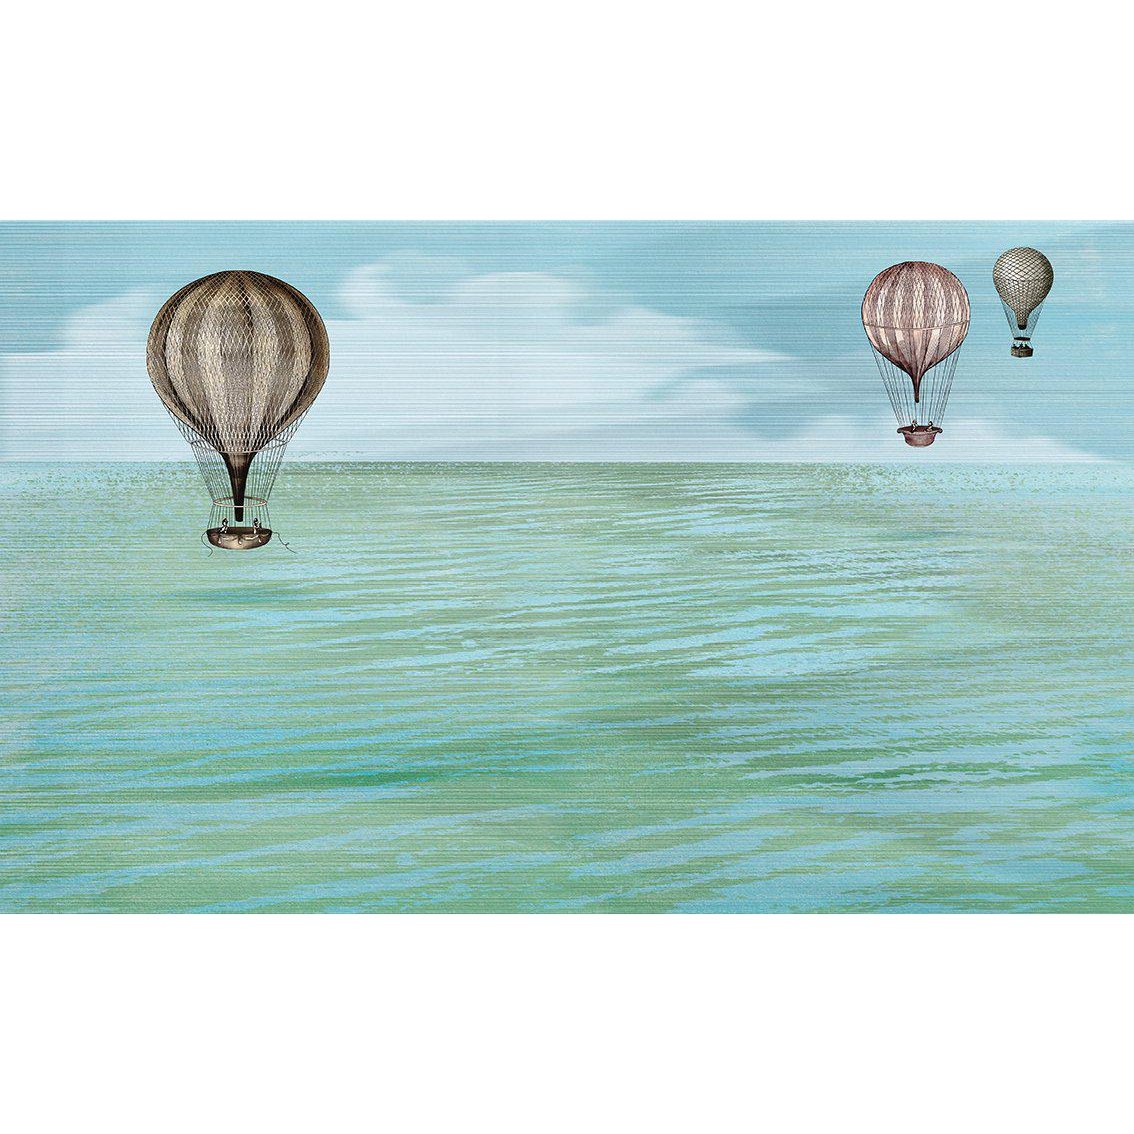 Ballons D'Antan-Digital Wallpaper-Skinwall-Green / Blue-49